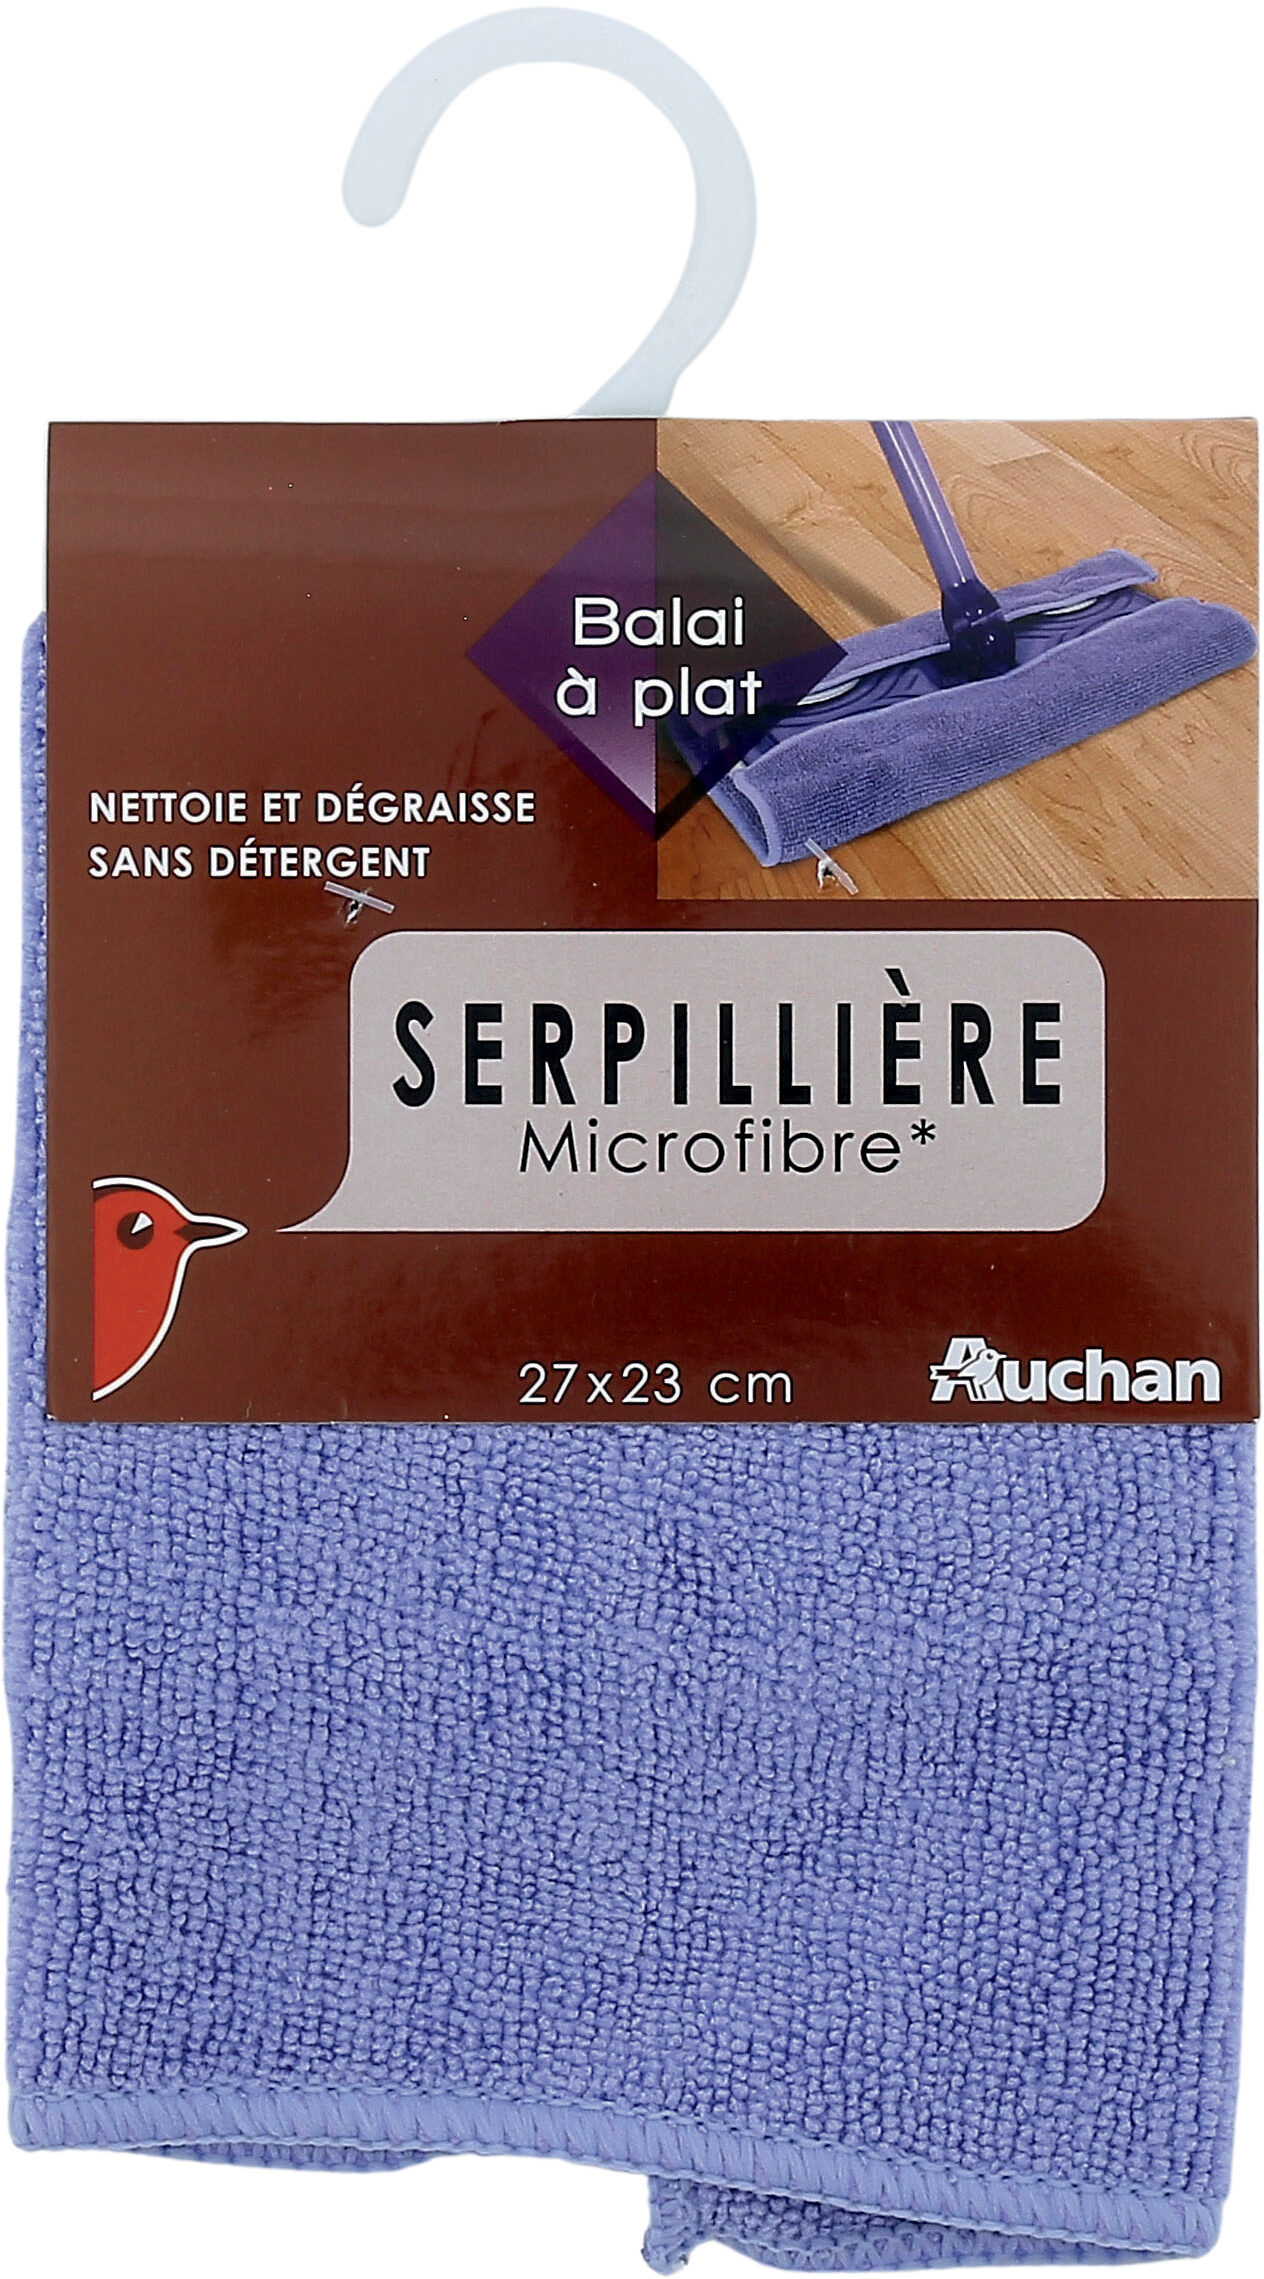 Auchan serpilliere micro fibre bouclee balai plat 27x23cm - Product - fr